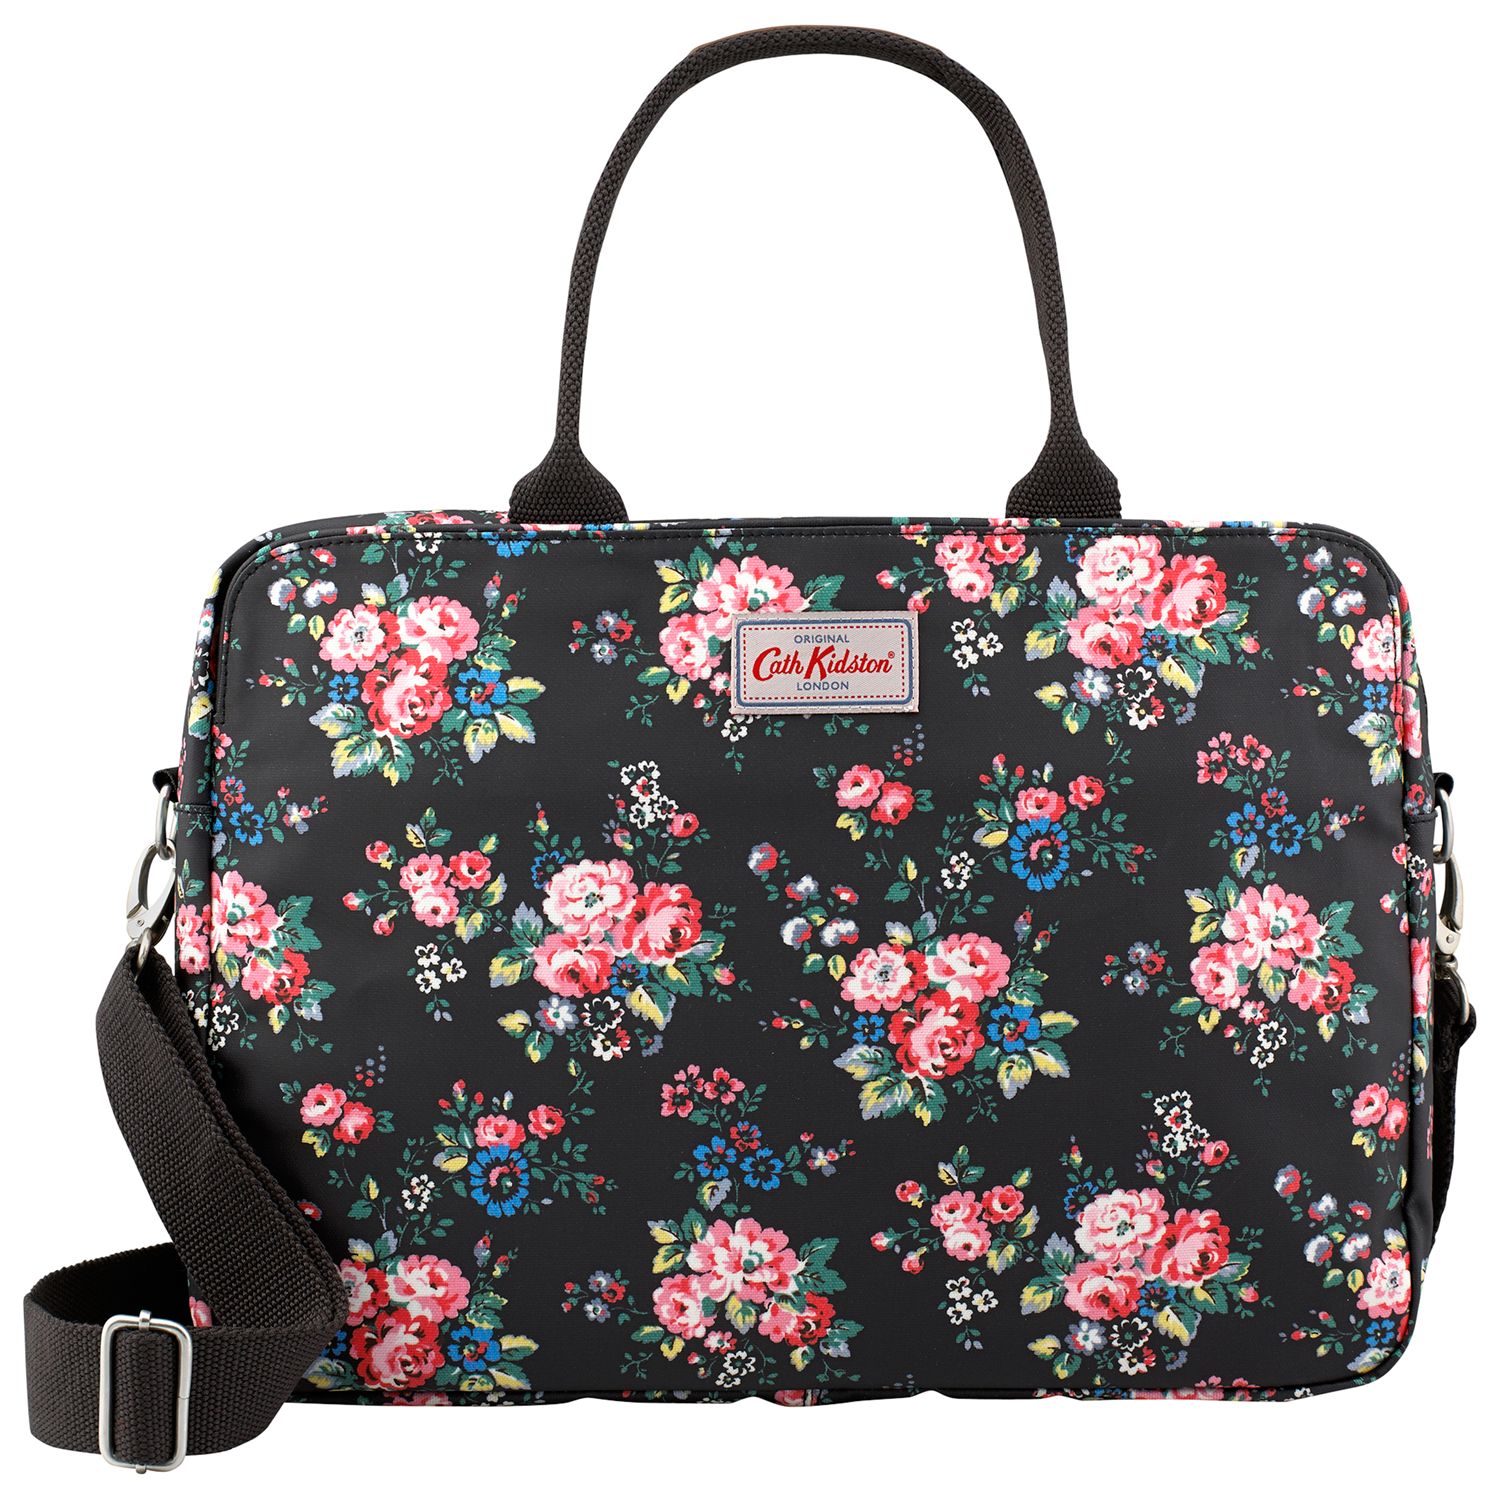 cath kidston black floral bag